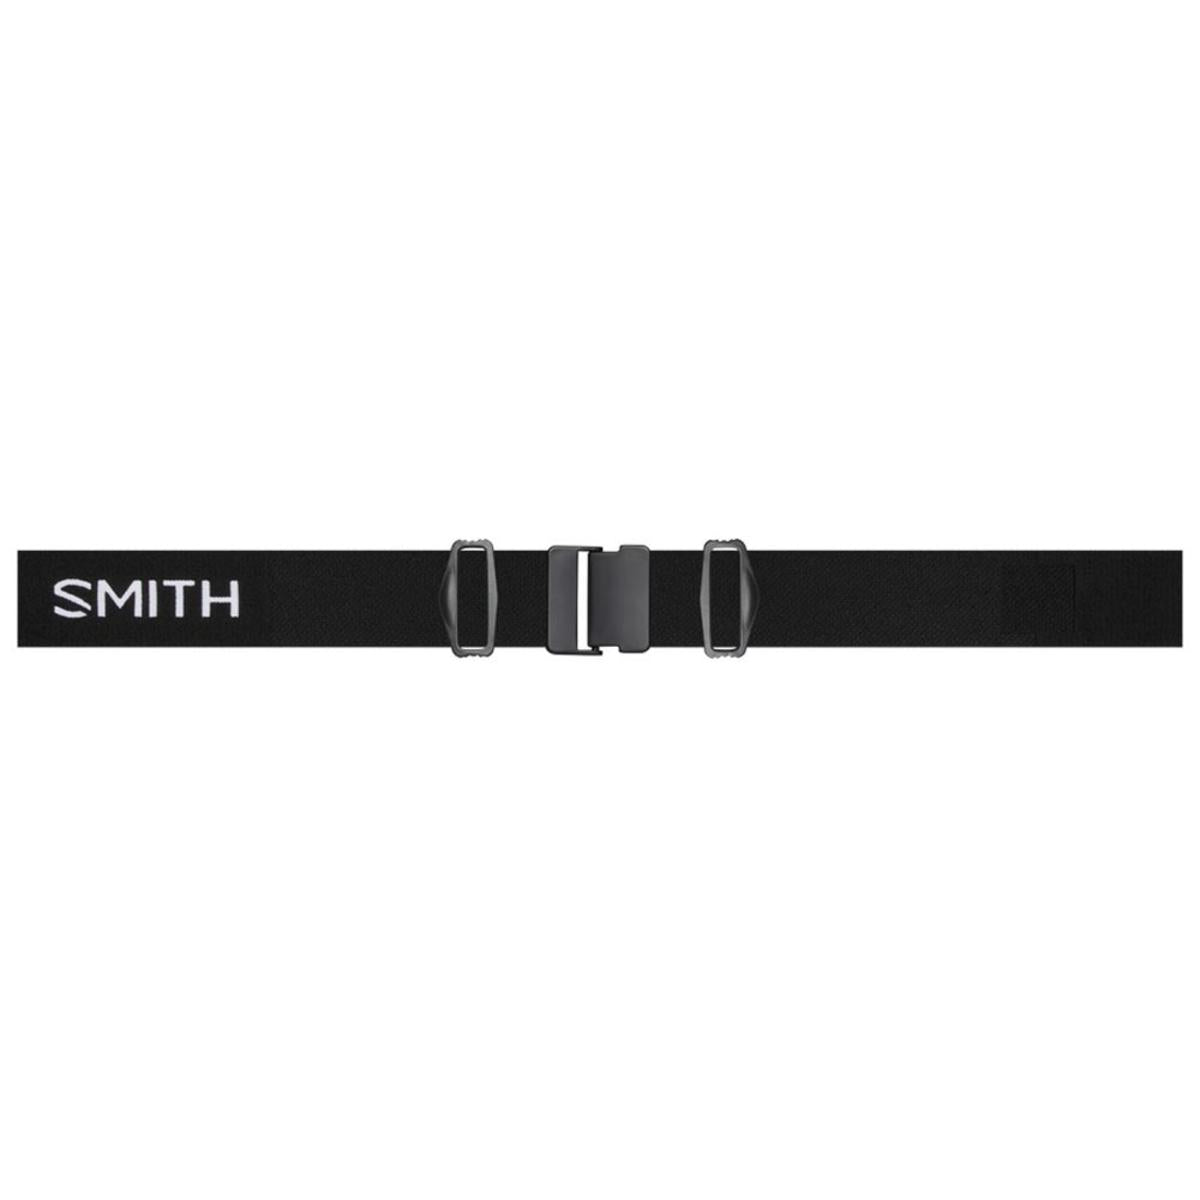 Smith Optics I/O MAG XL Goggles ChromaPop Sun Red Mirror - Black Frame